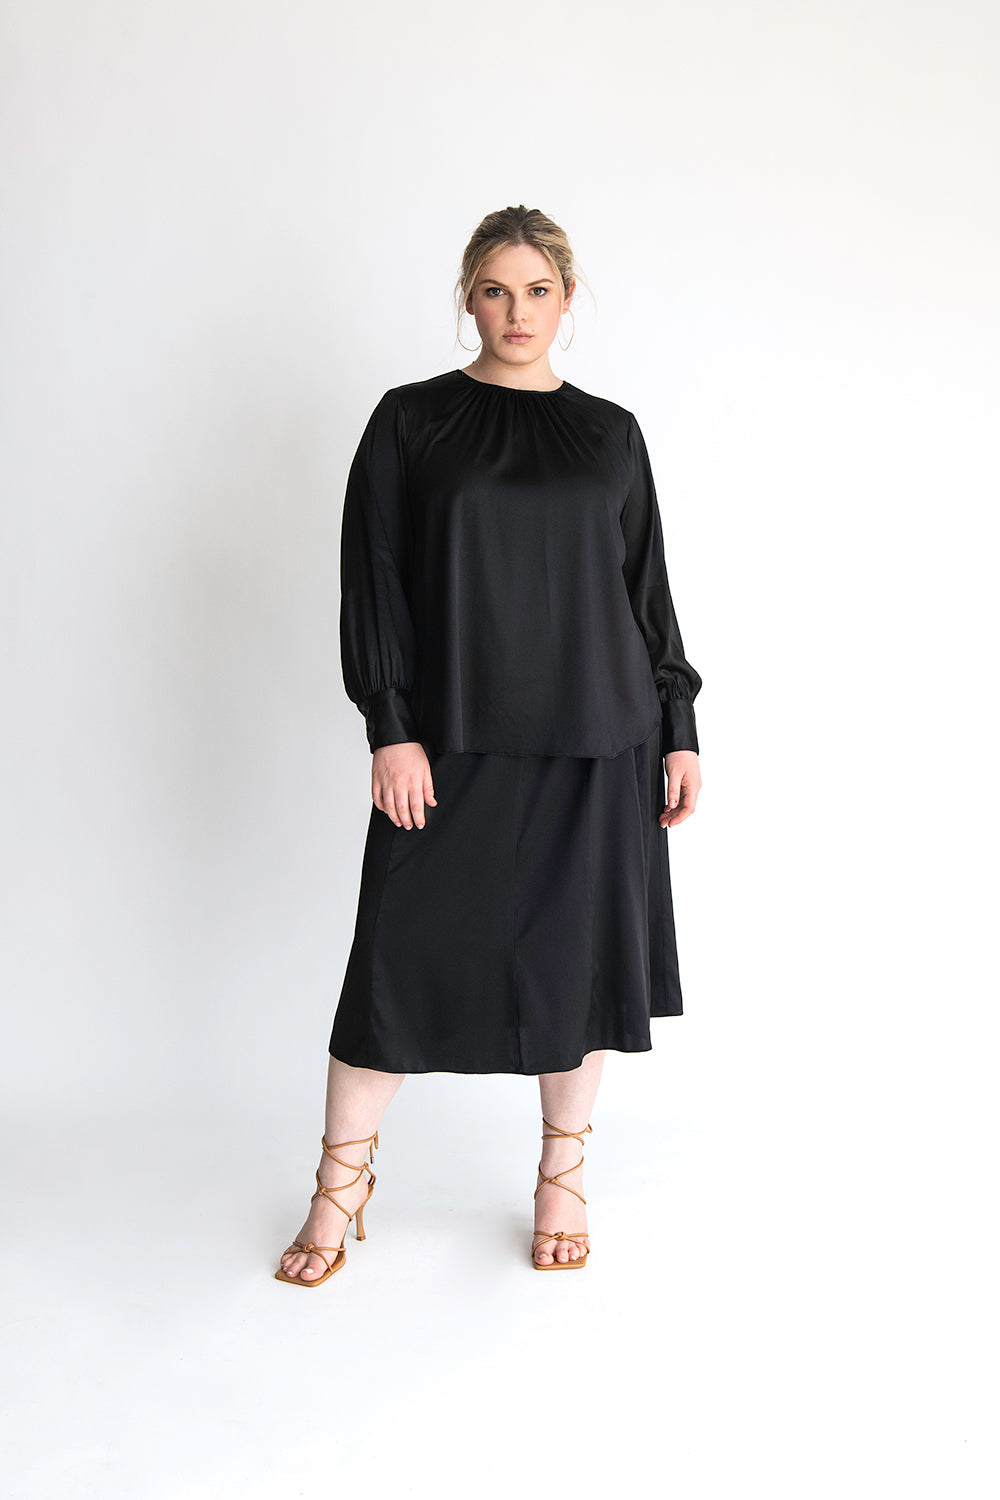 Women's black silk blouse long sleeve